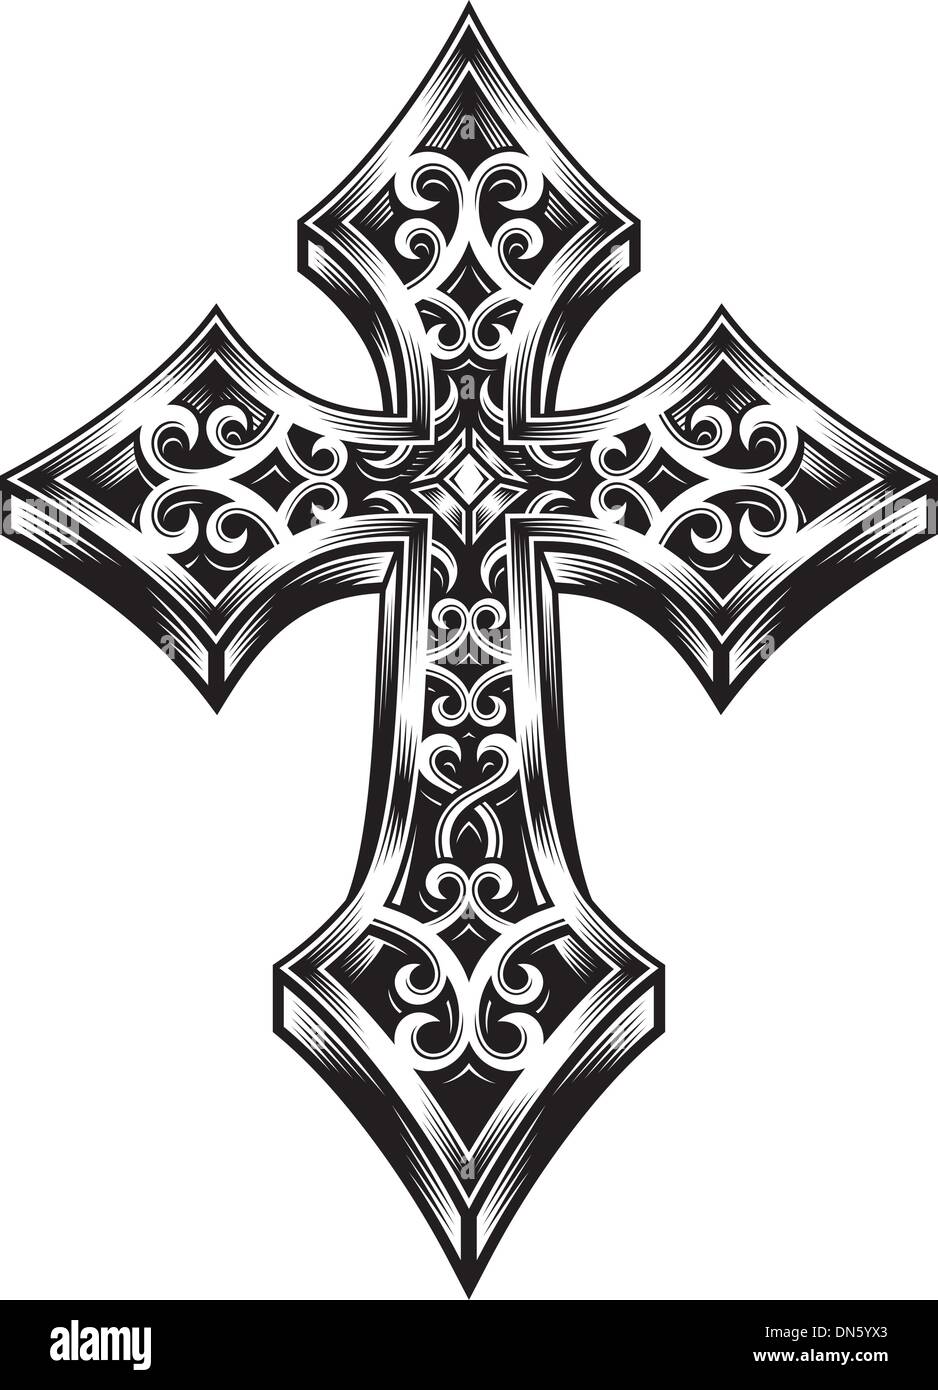 Cruz Celta ornamental Imagen Vector de stock - Alamy